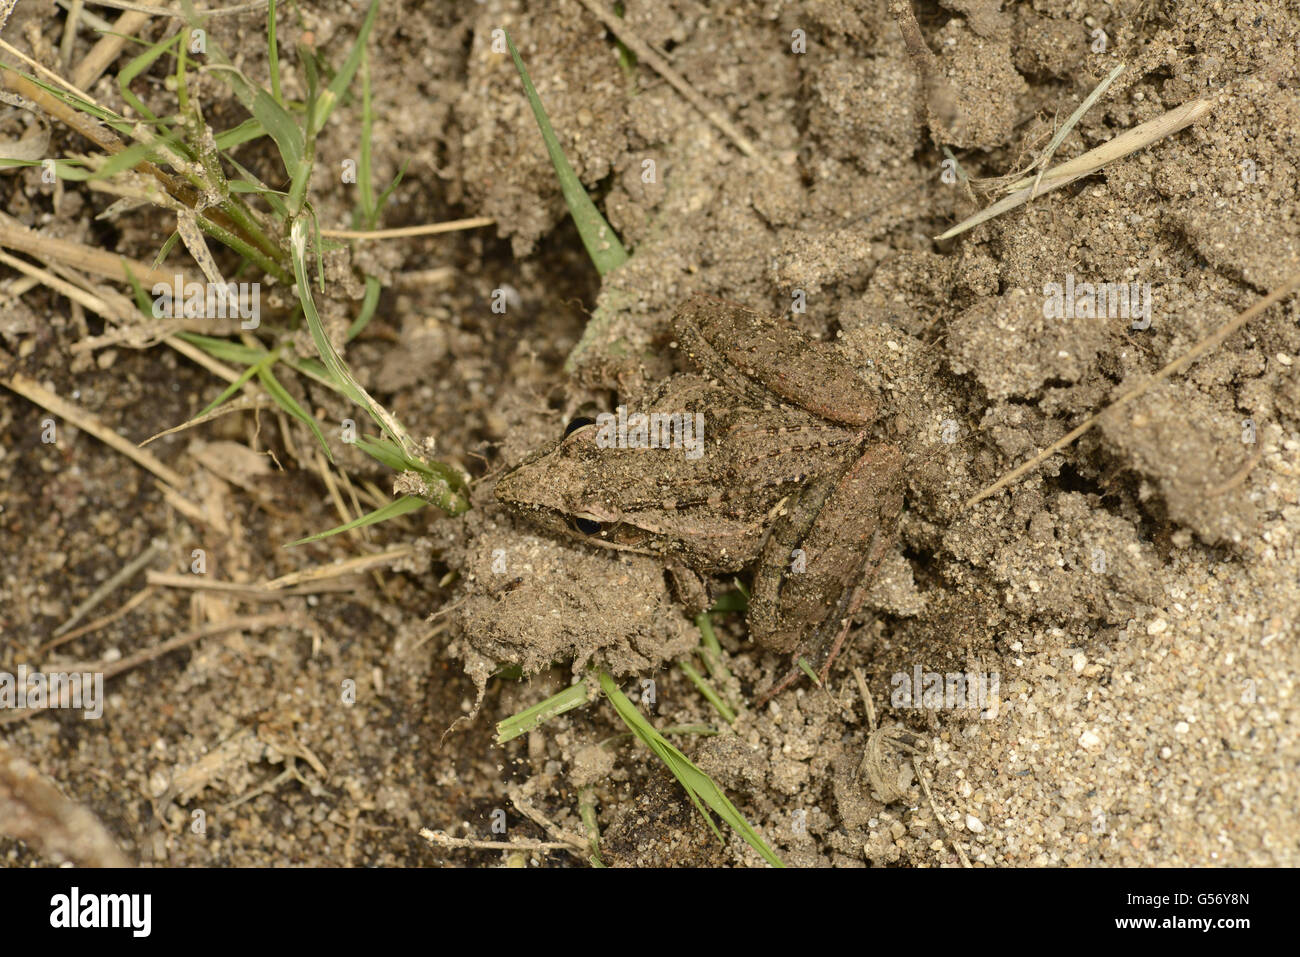 Sharp-nosed Rocket Frog (Ptychadena oxyrhynchus) adult, resting on sandy soil, Mathews Mountains, Kenya, October Stock Photo